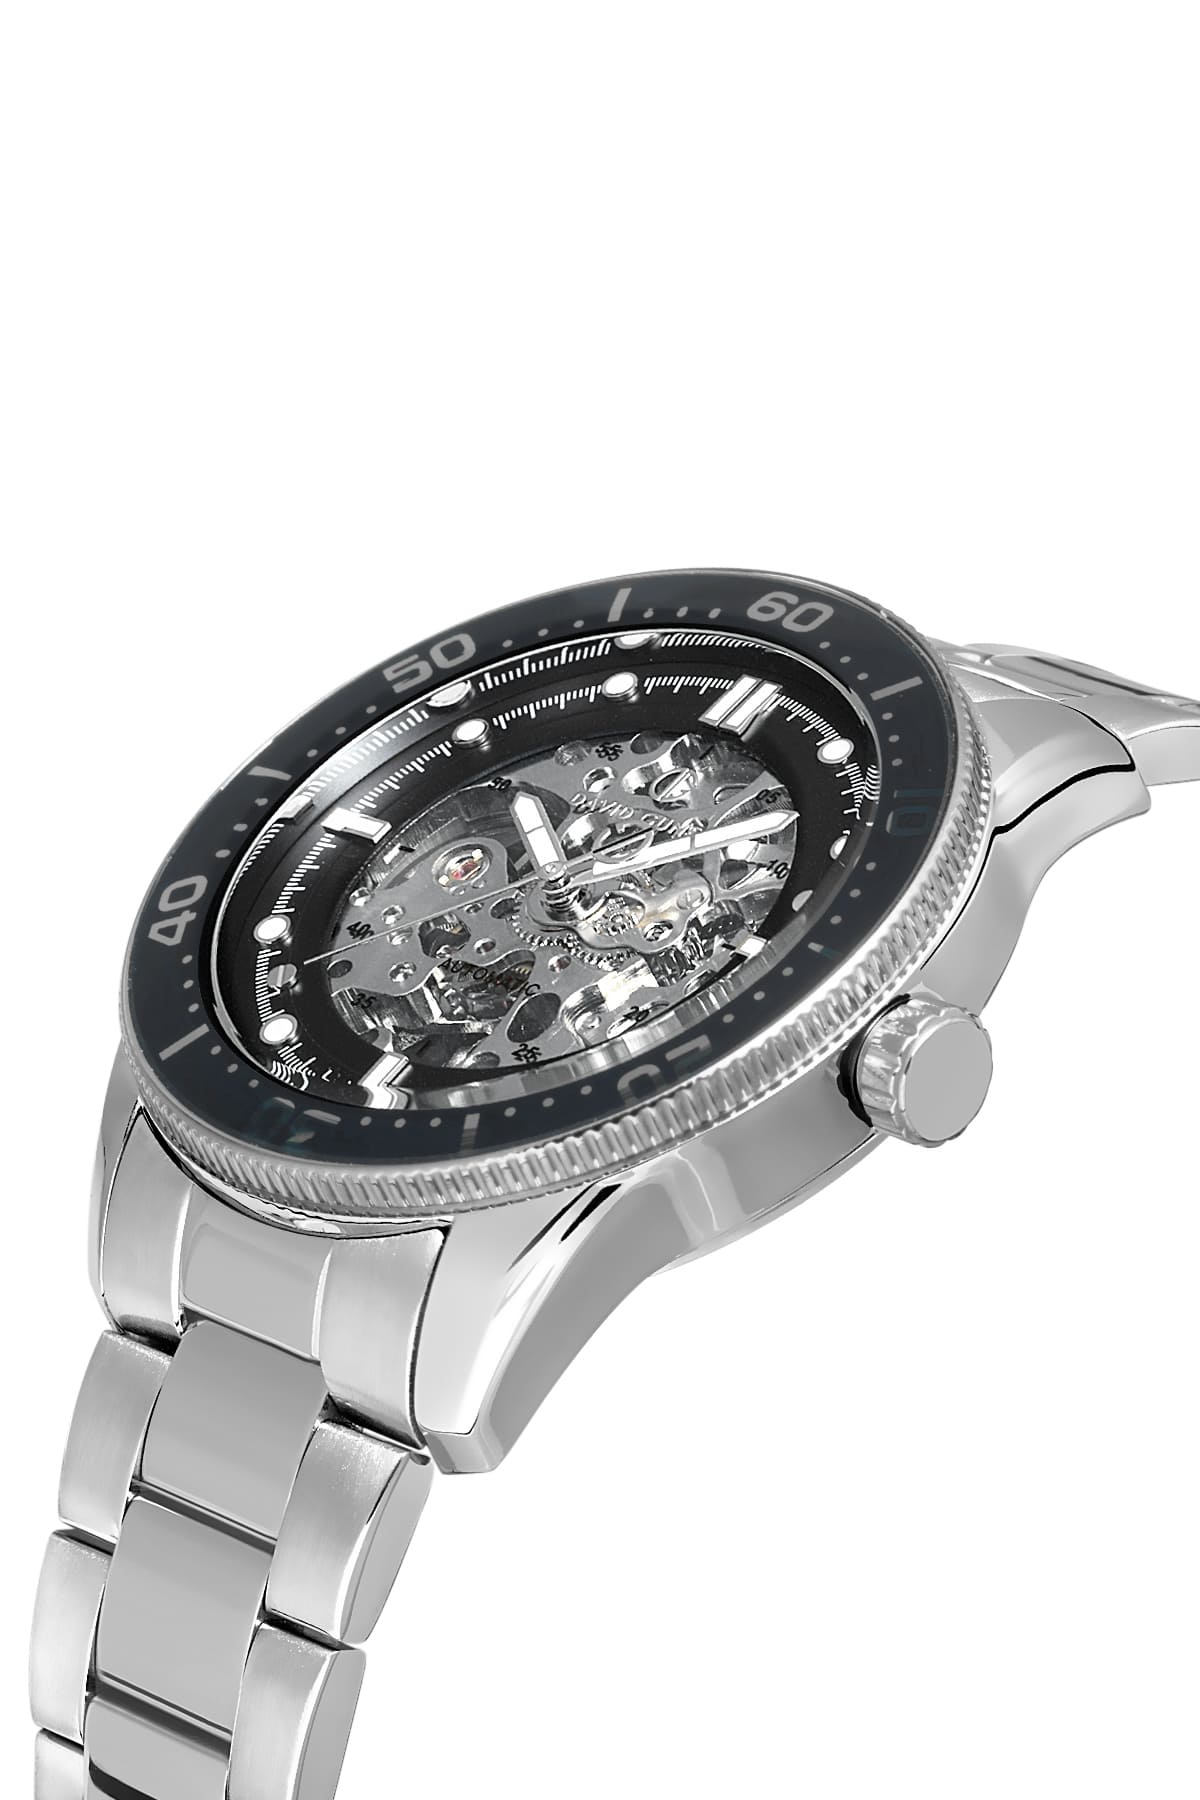 David Guner Black Dial Silver Plated Men's Wristwatch